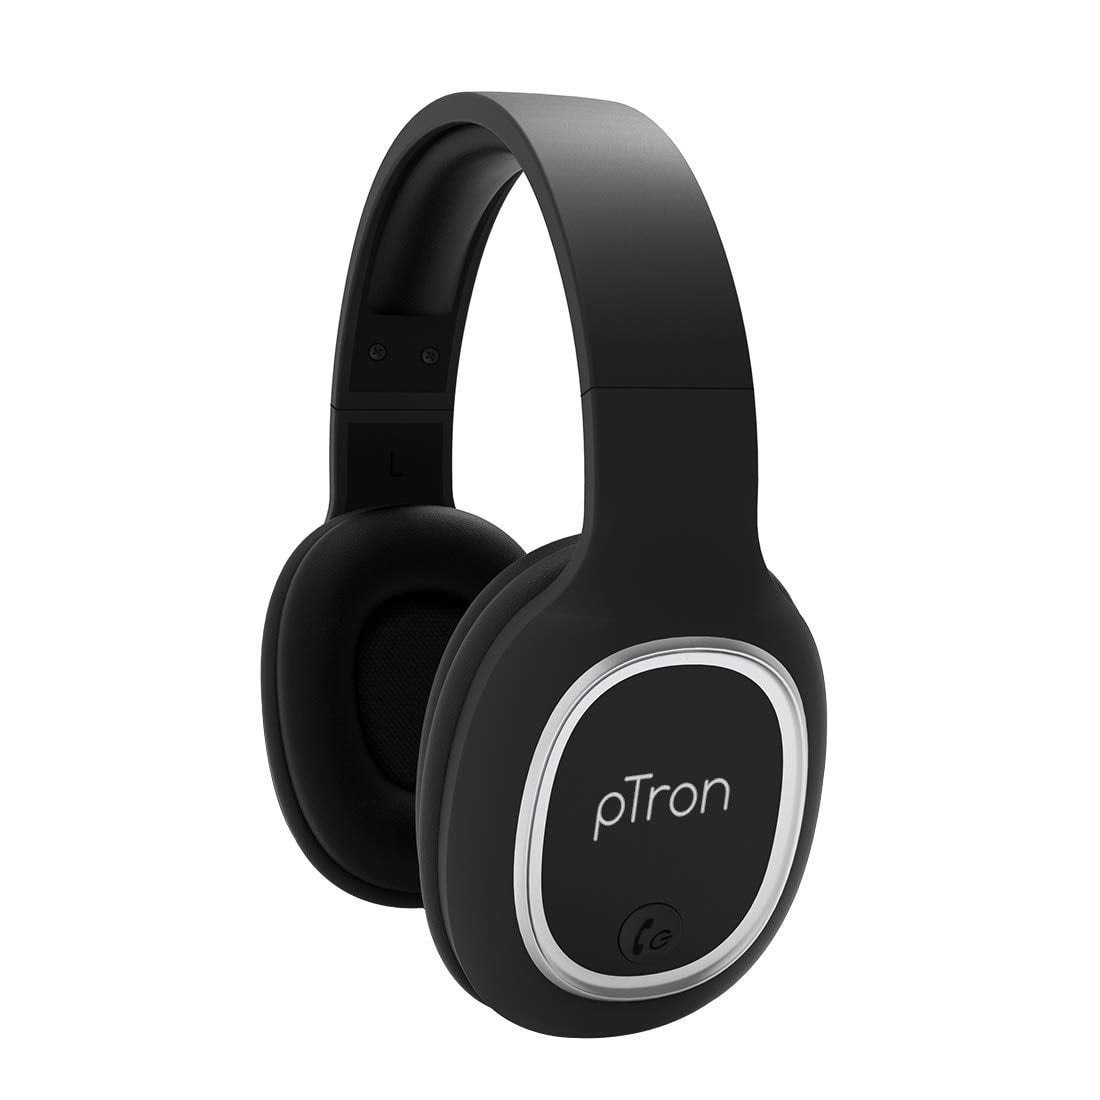 pTron Studio Over-Ear Bluetooth 5.0 Wireless Headphones, Hi-Fi Sound with Deep Bass, 12Hrs Playback, Ergonomic & Lightweight Wireless Headset, Soft Cushions Earpads, Aux Port & Mic